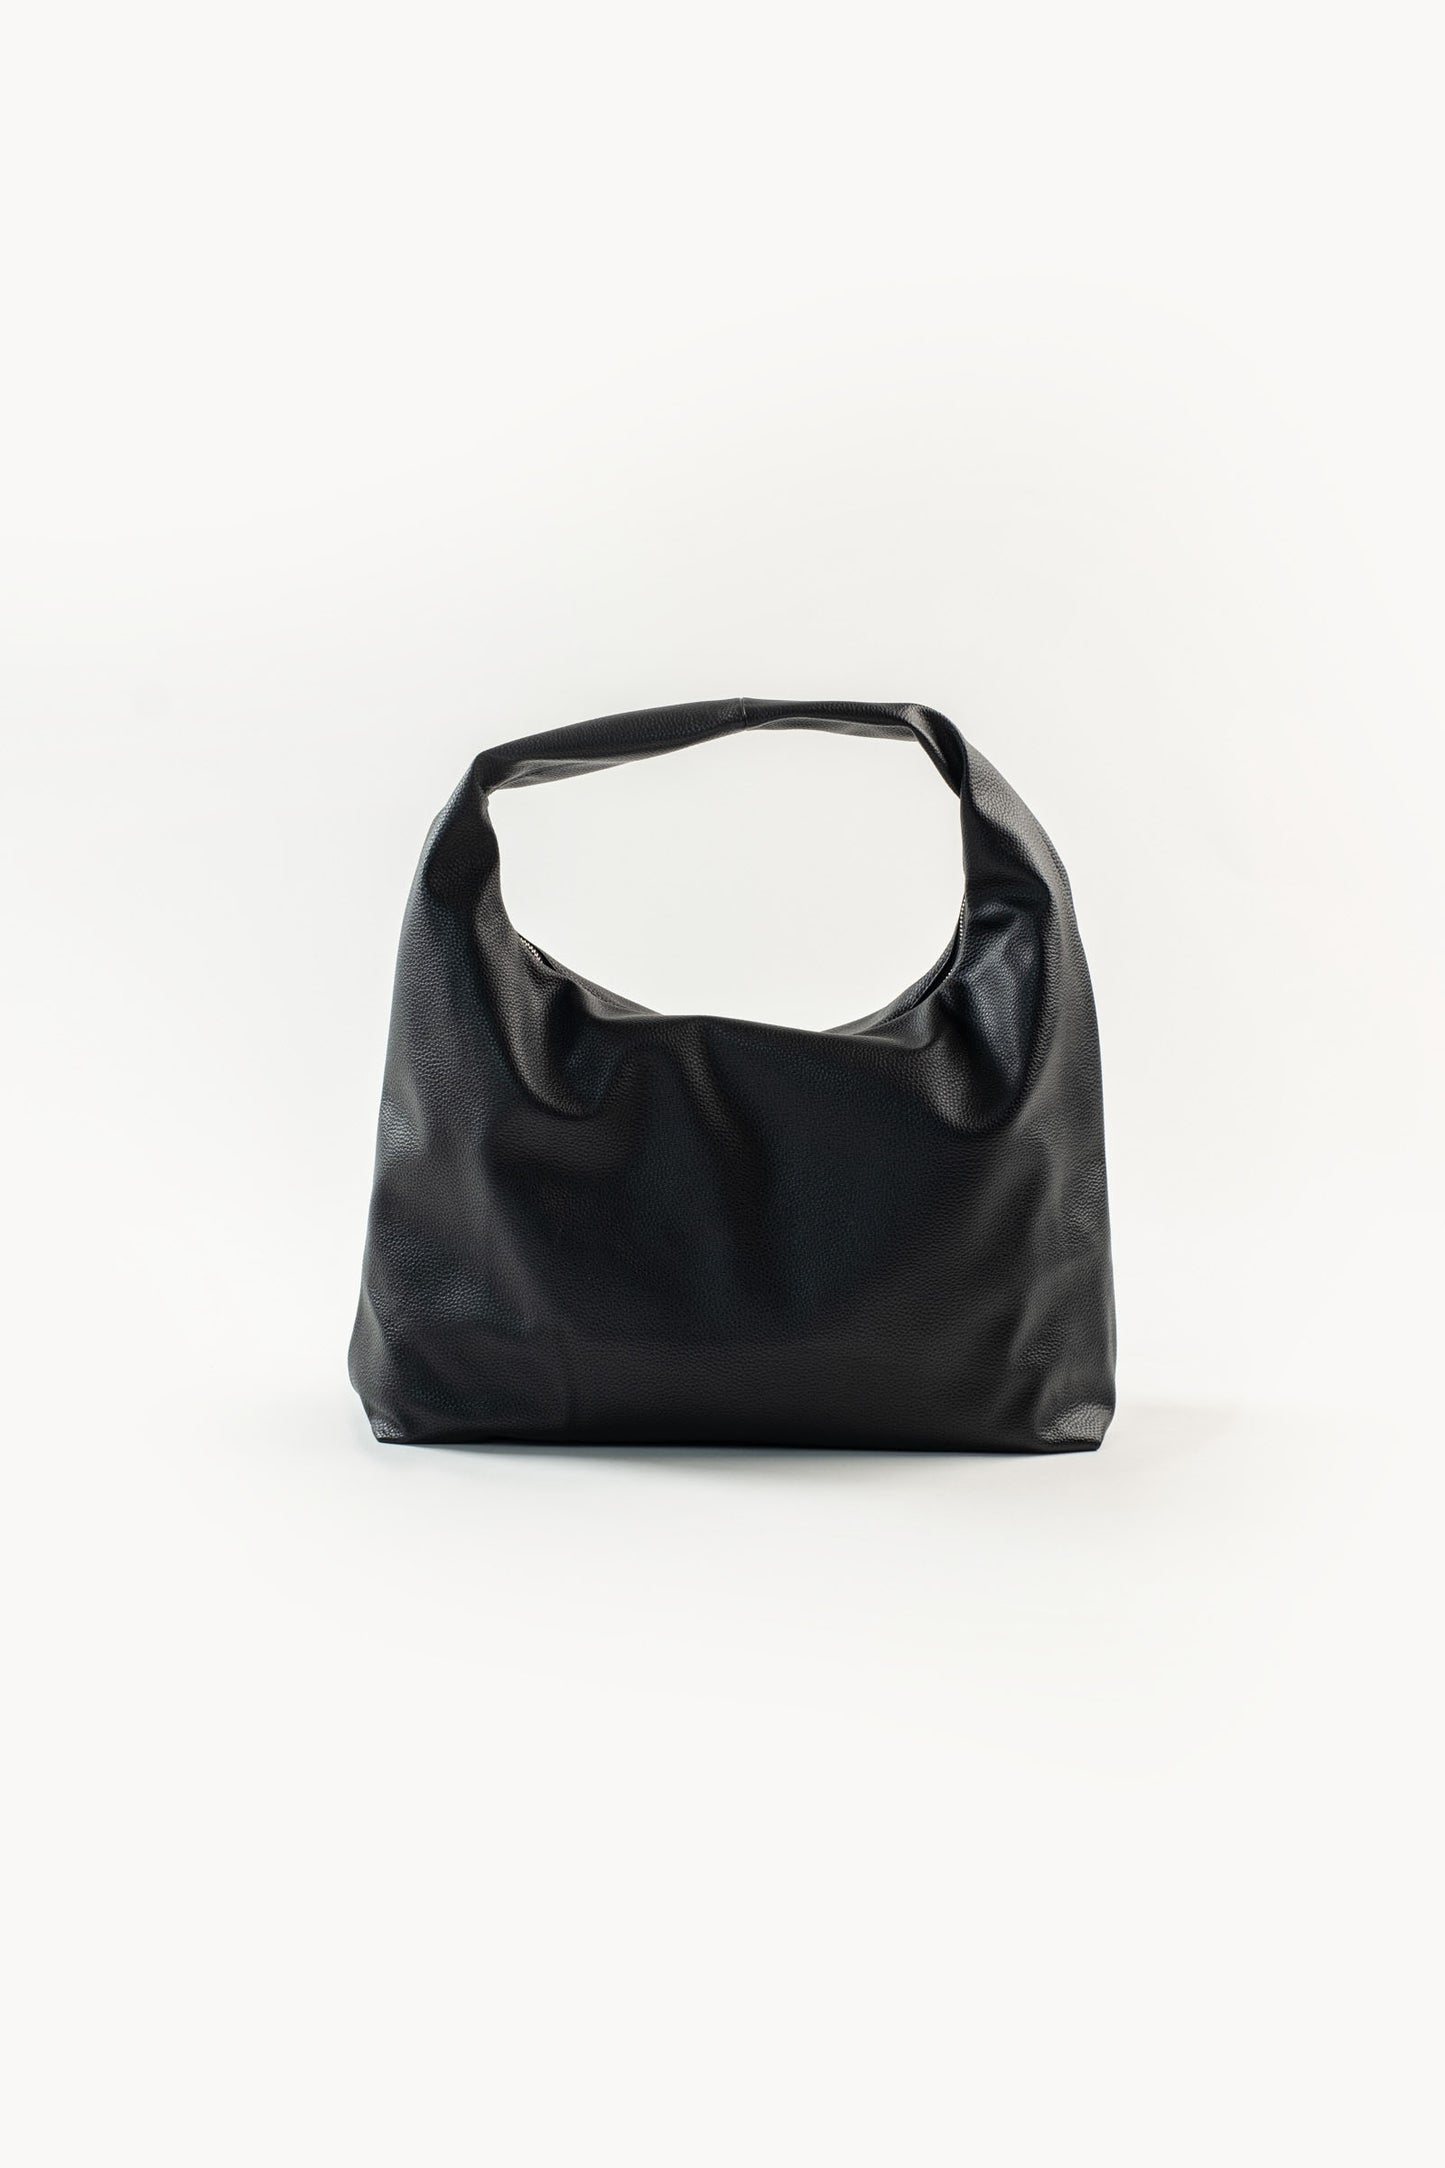 Large Hobo Bag in Charcoal (Pre-Order)